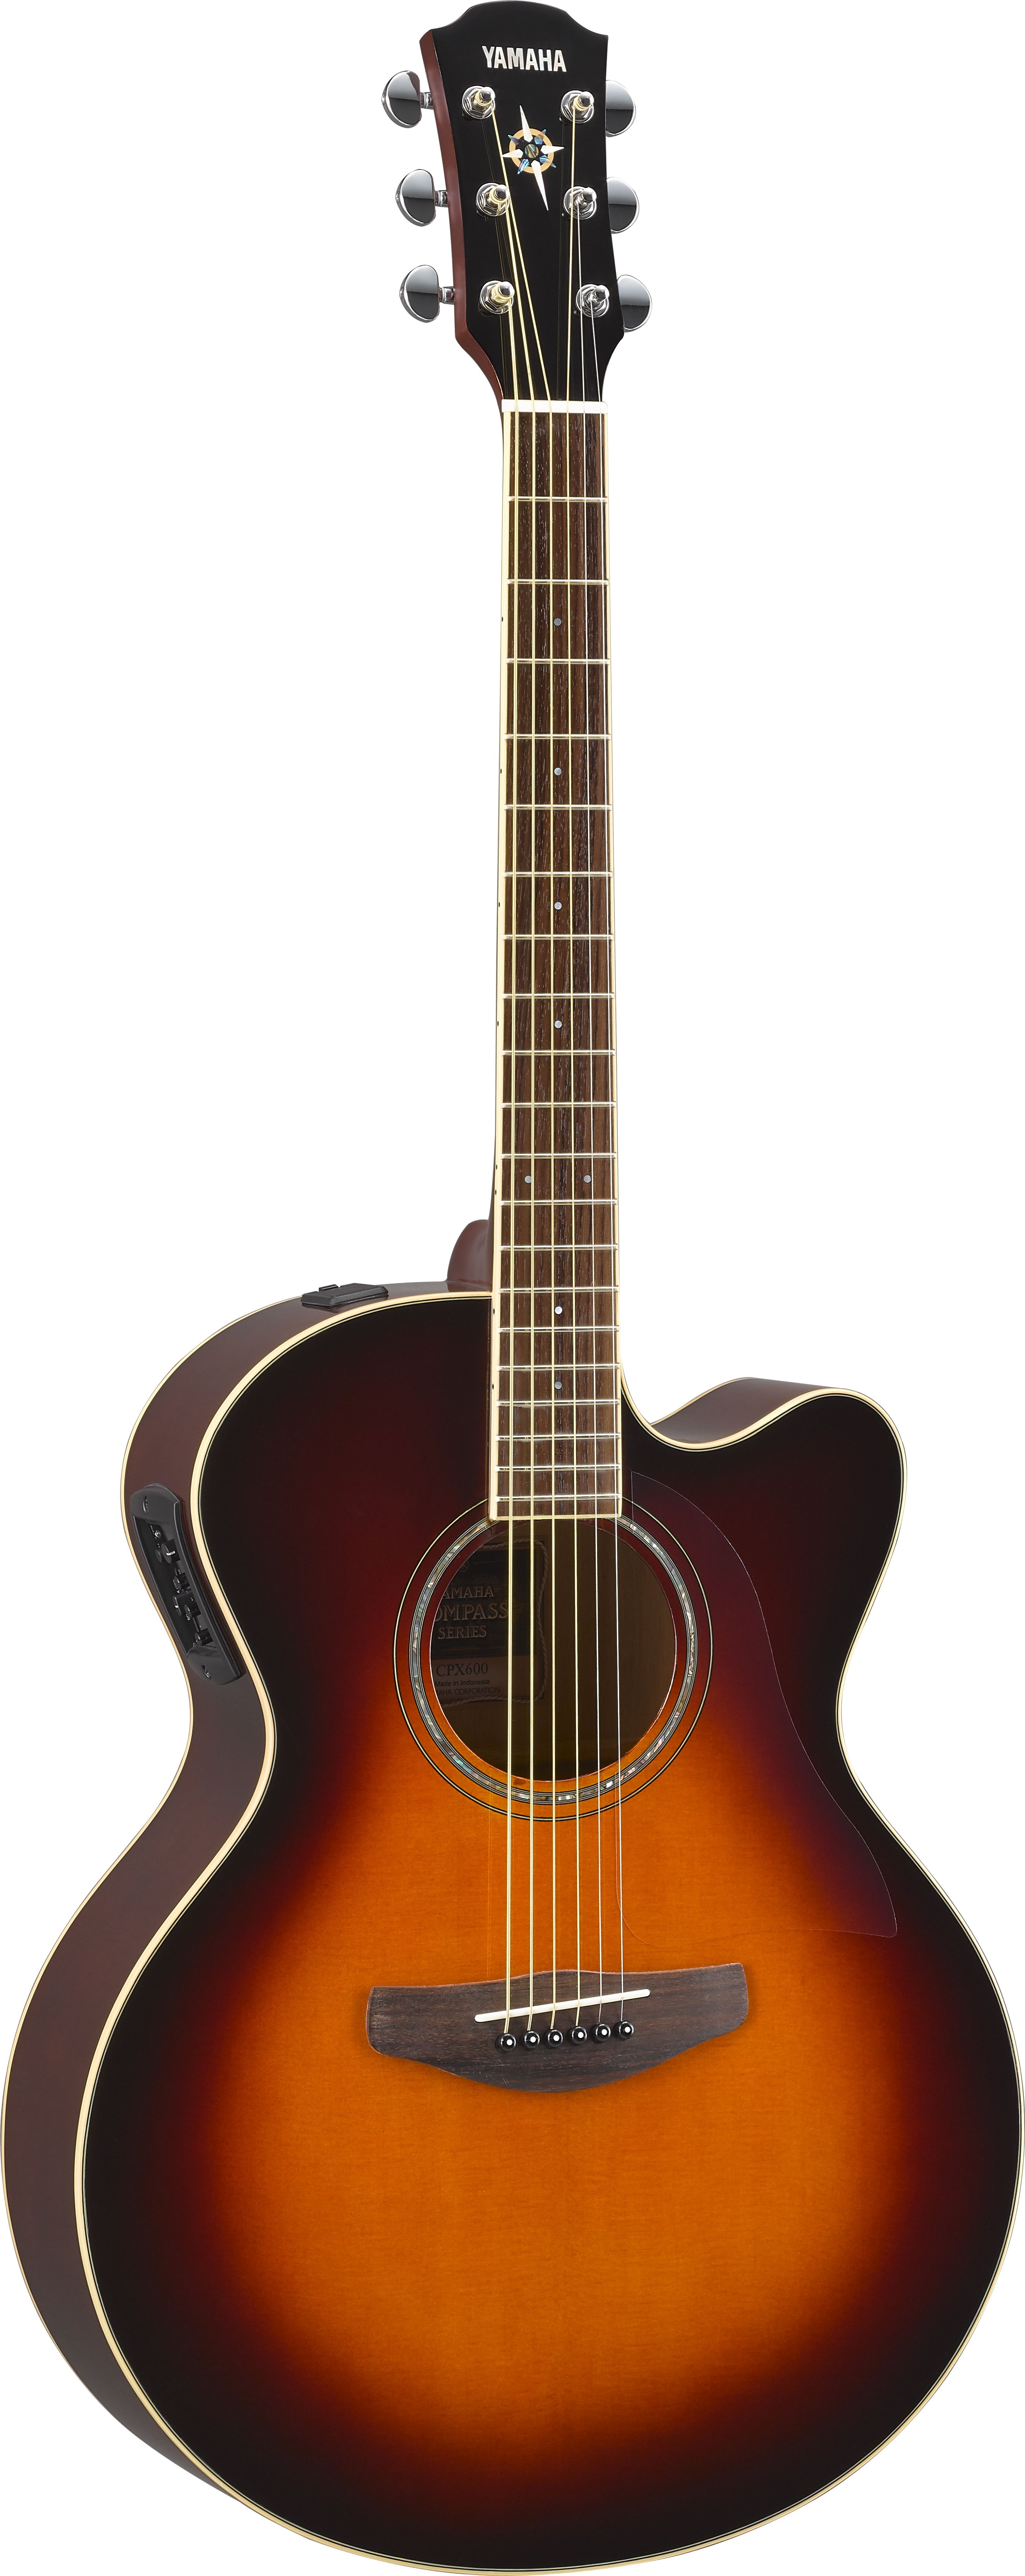 Yamaha CPX600 Western Guitar (Old Violin Sunburst)